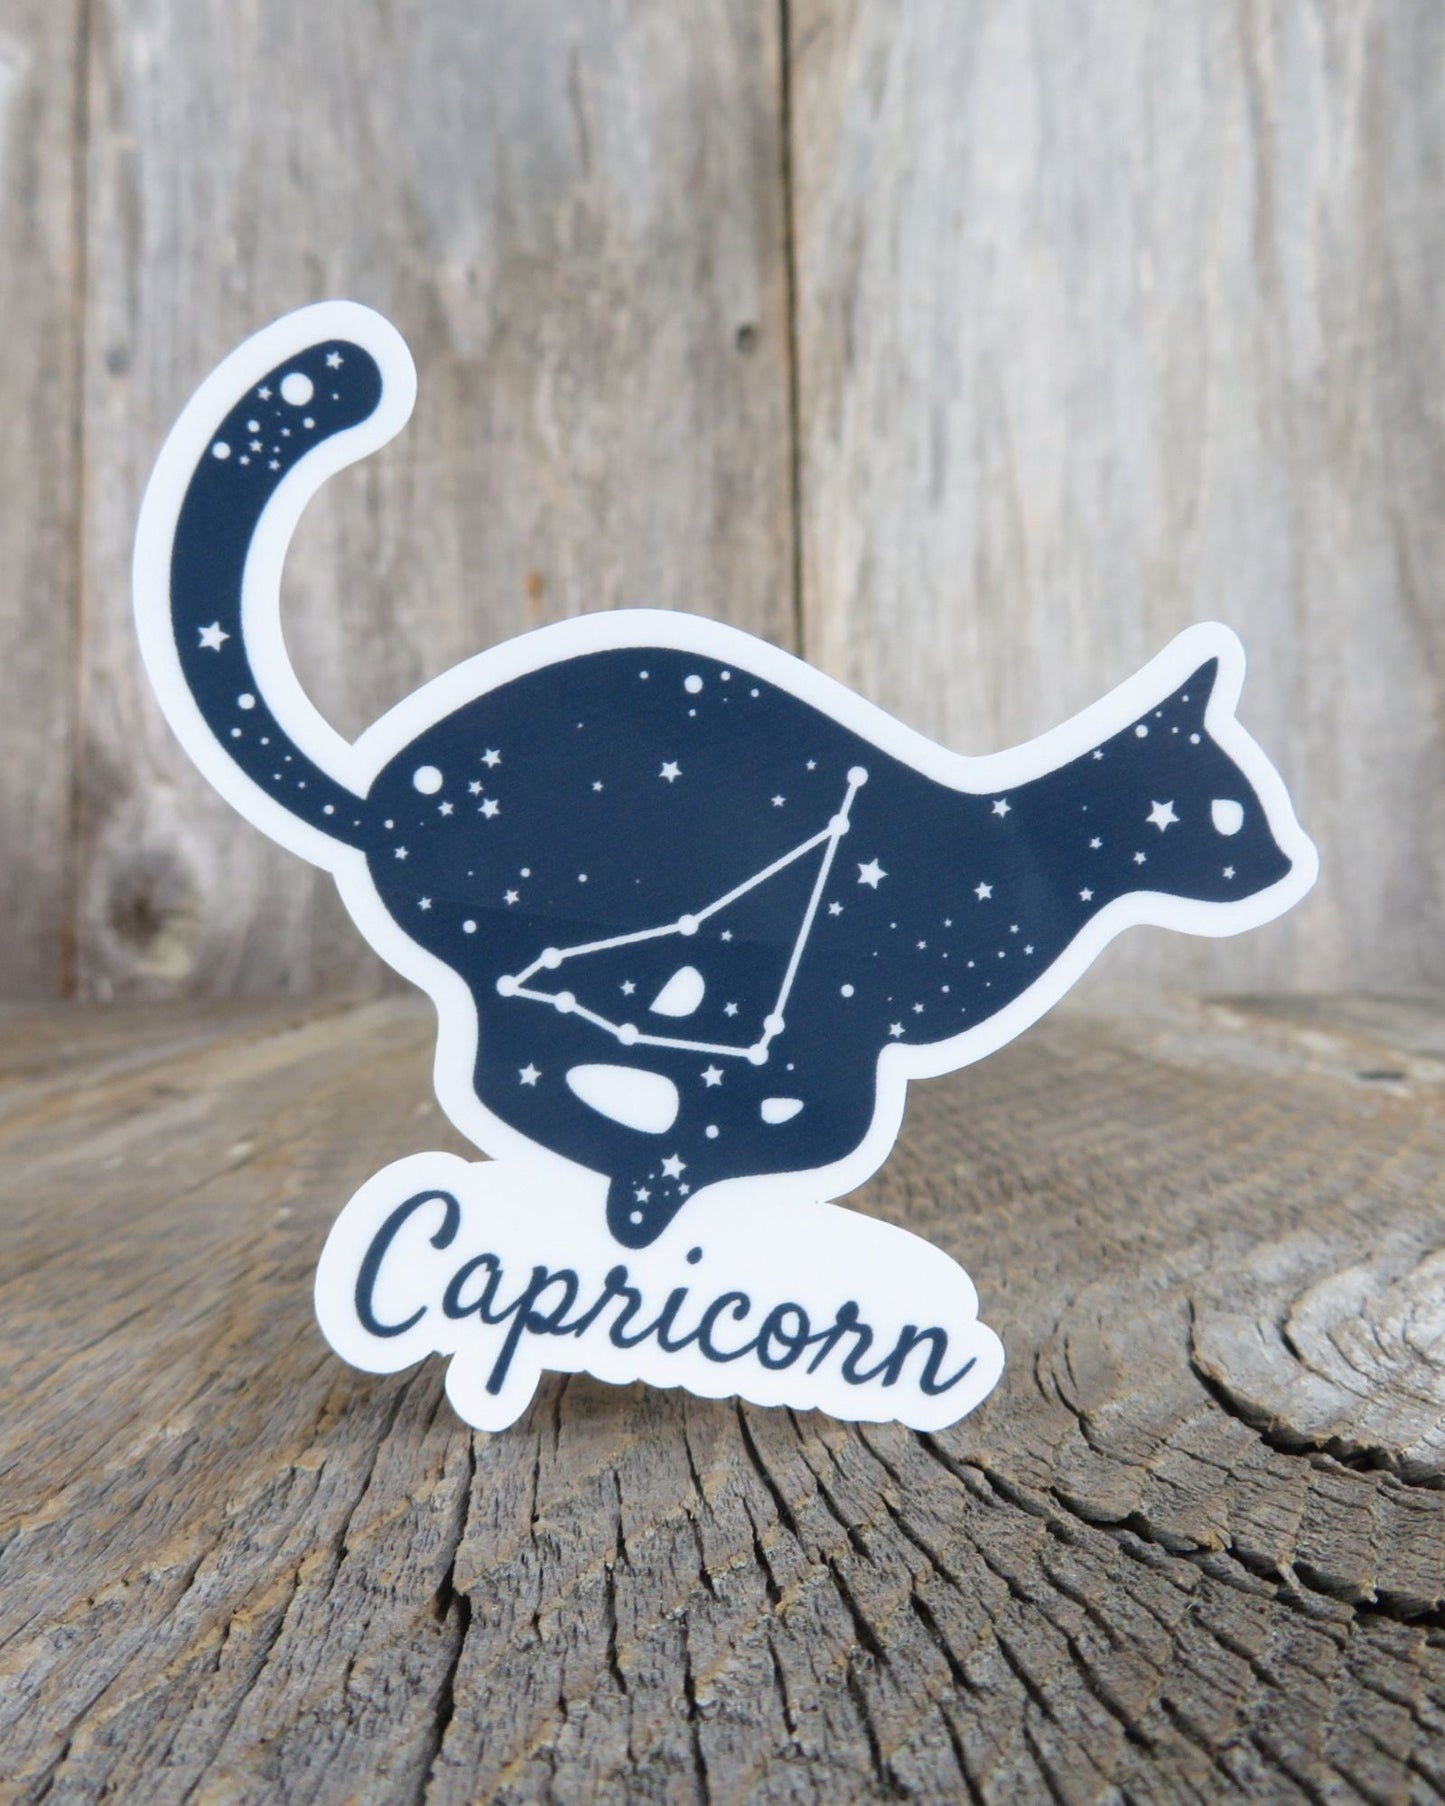 Capricorn Cat Sticker Astrology Birthday Star Sign Waterproof Star Chart